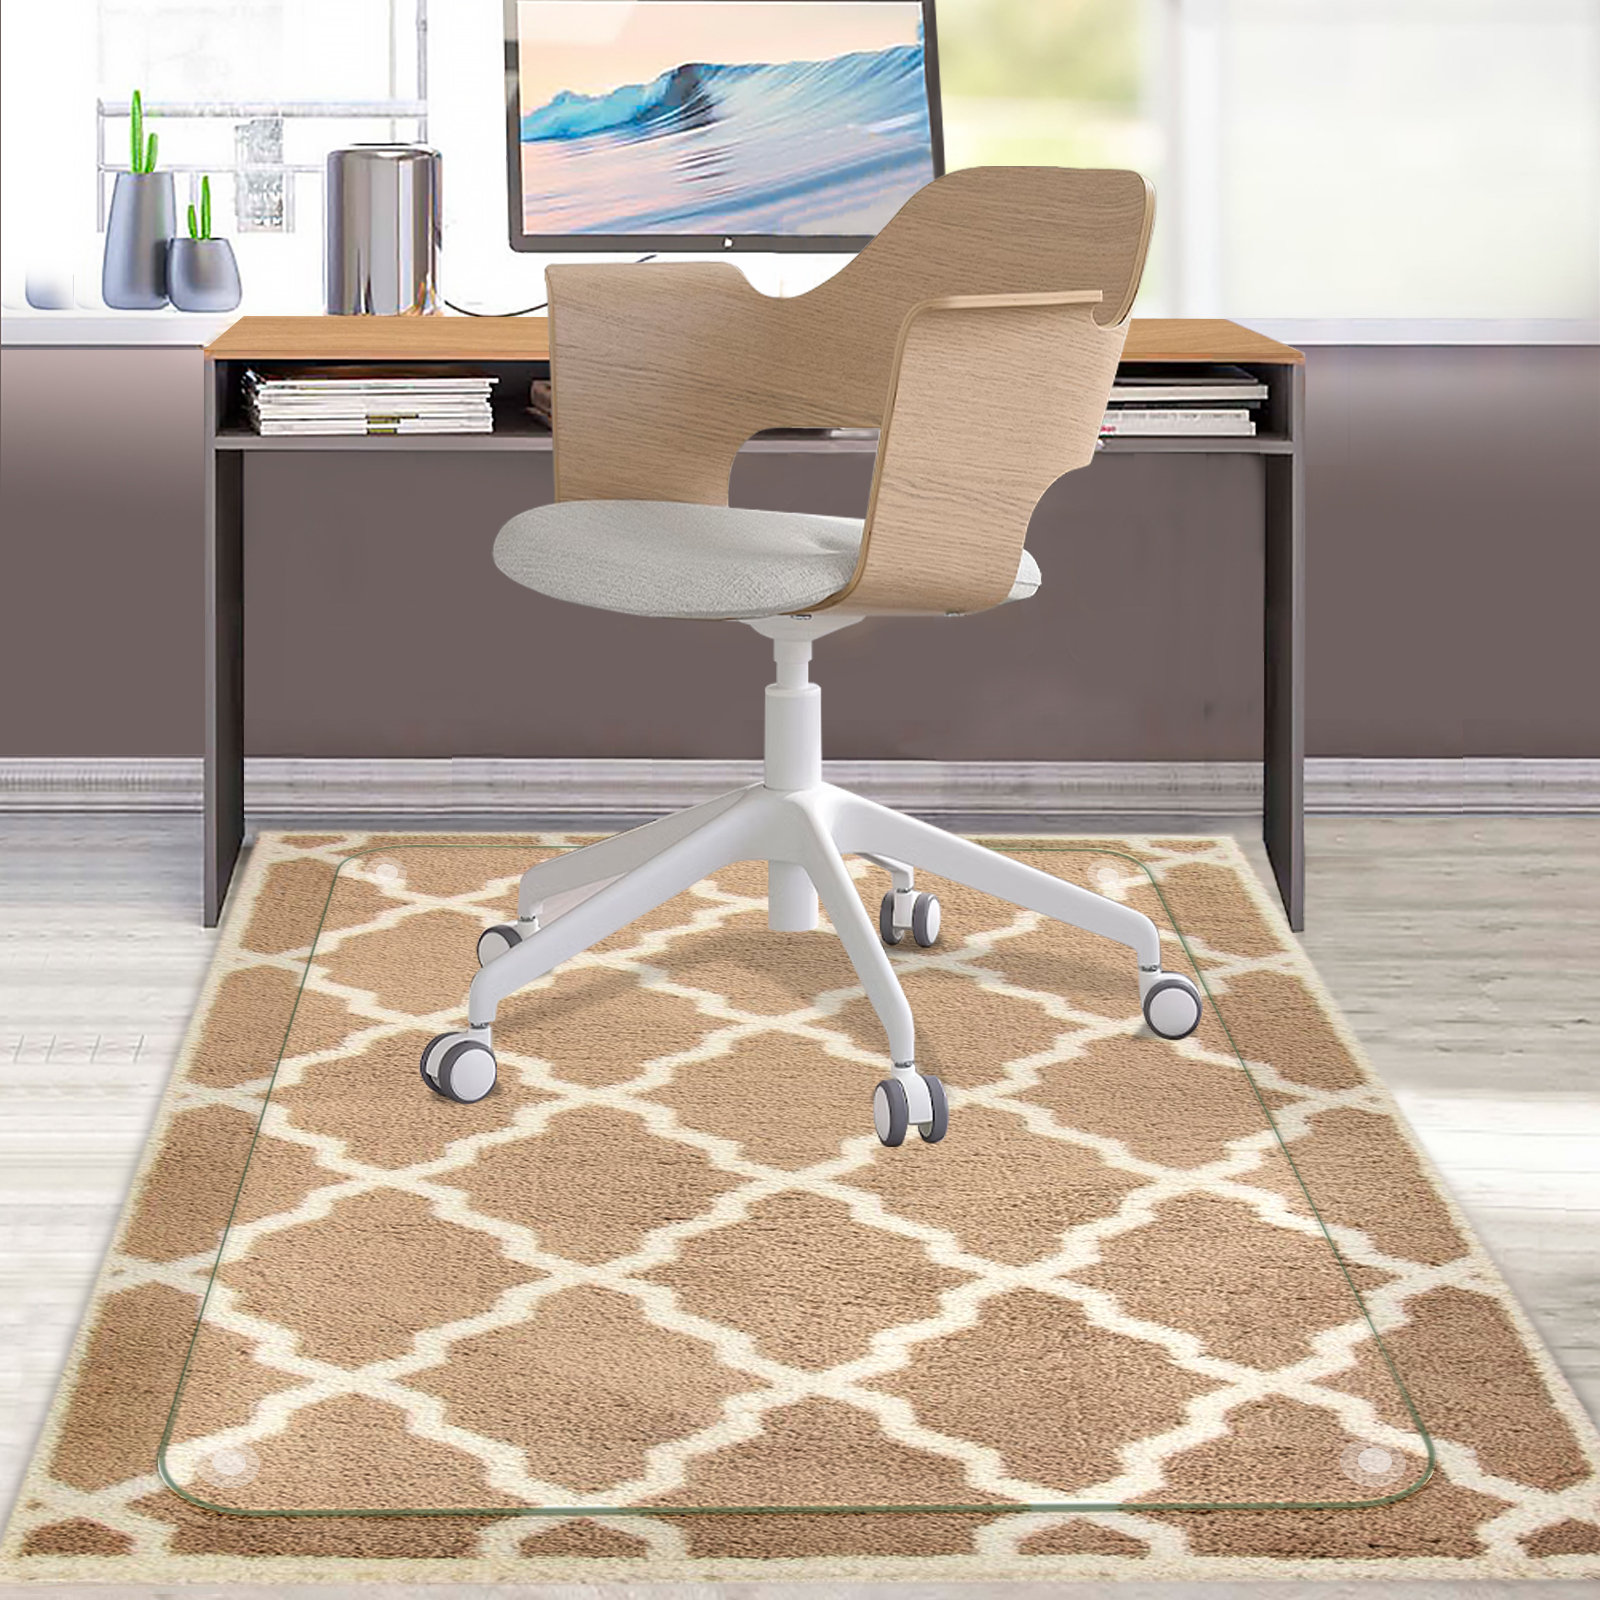 Rose Home Fashion Tempered Glass Chair Mat Office Chair Mats for Carpet &  Hardwood Floor Desk Chair Mat 36